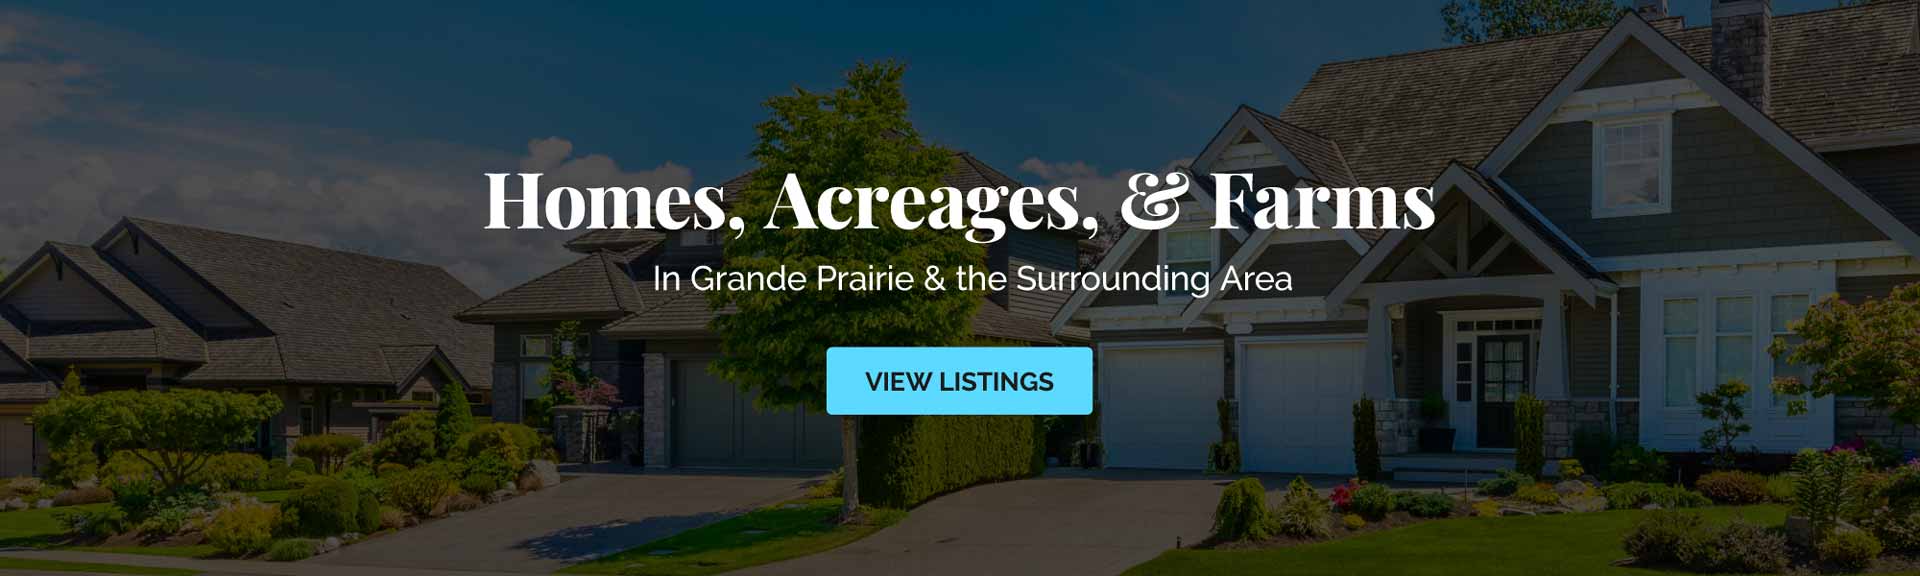 Homes, Acreages, & Farms